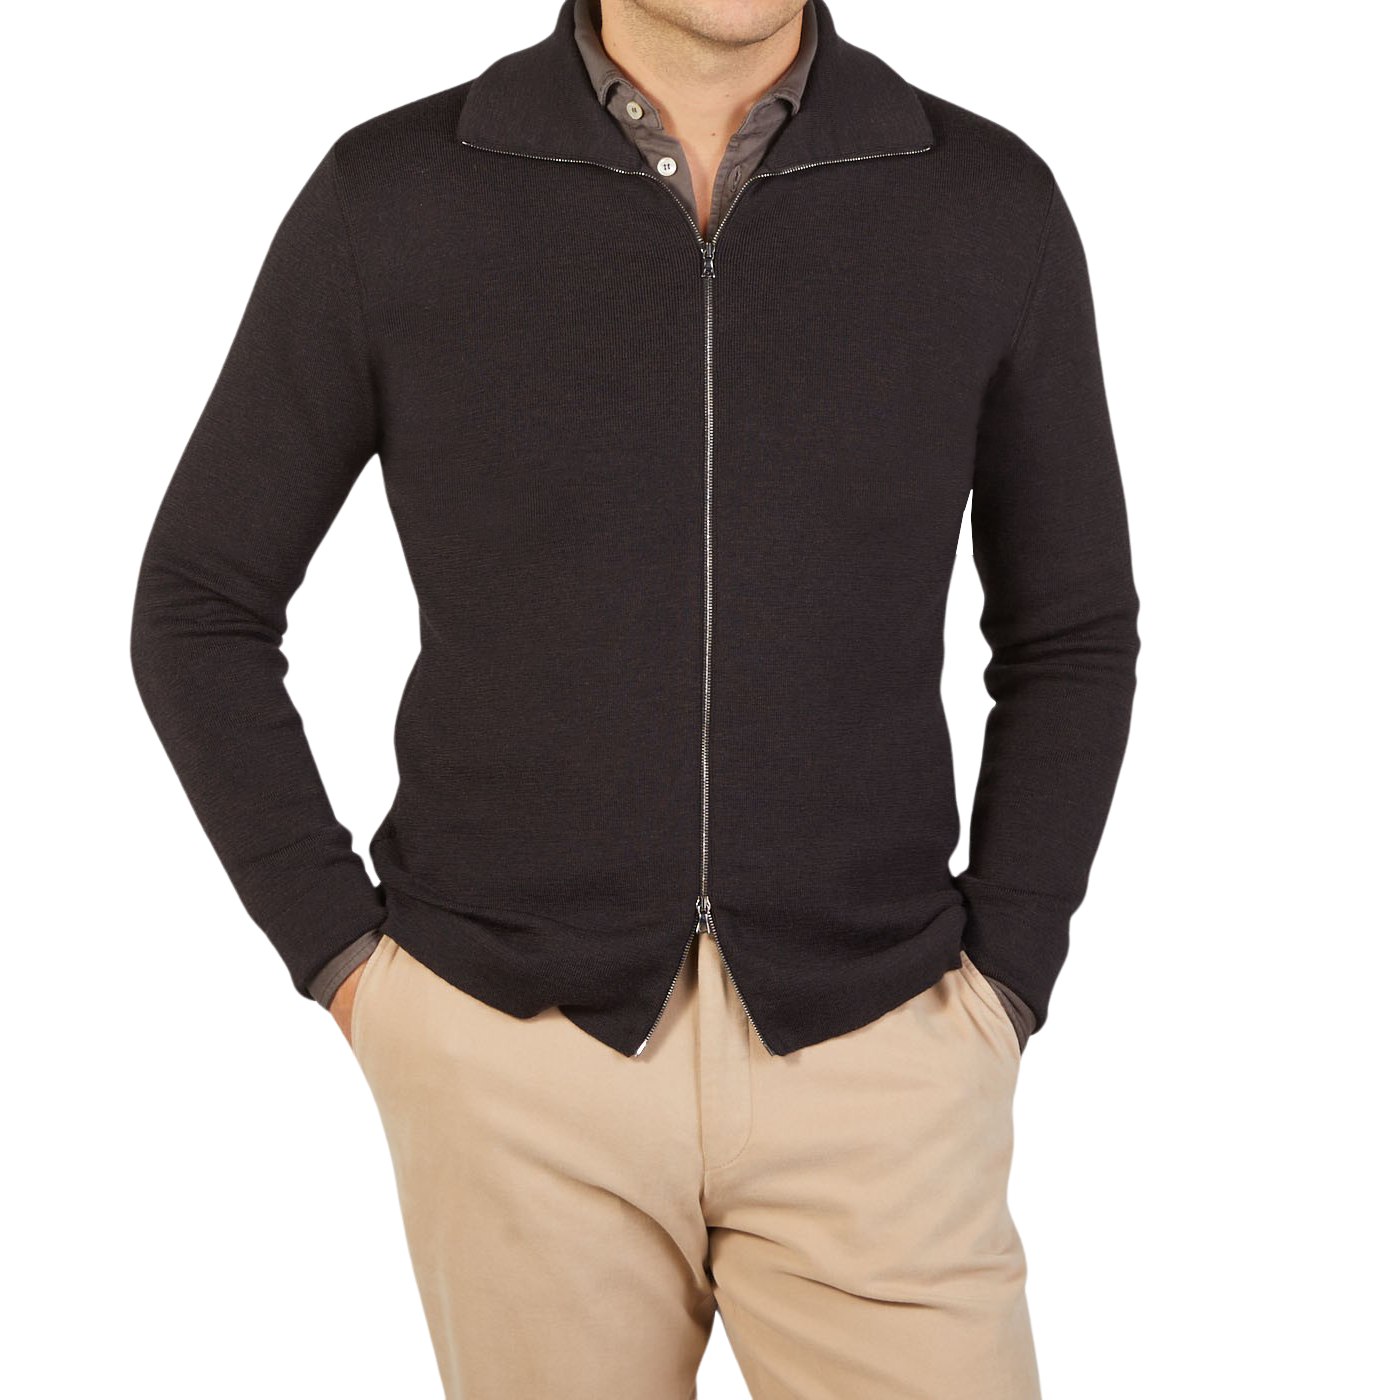 A man wearing a G.R.P brown melange merino wool zip jacket and tan pants.